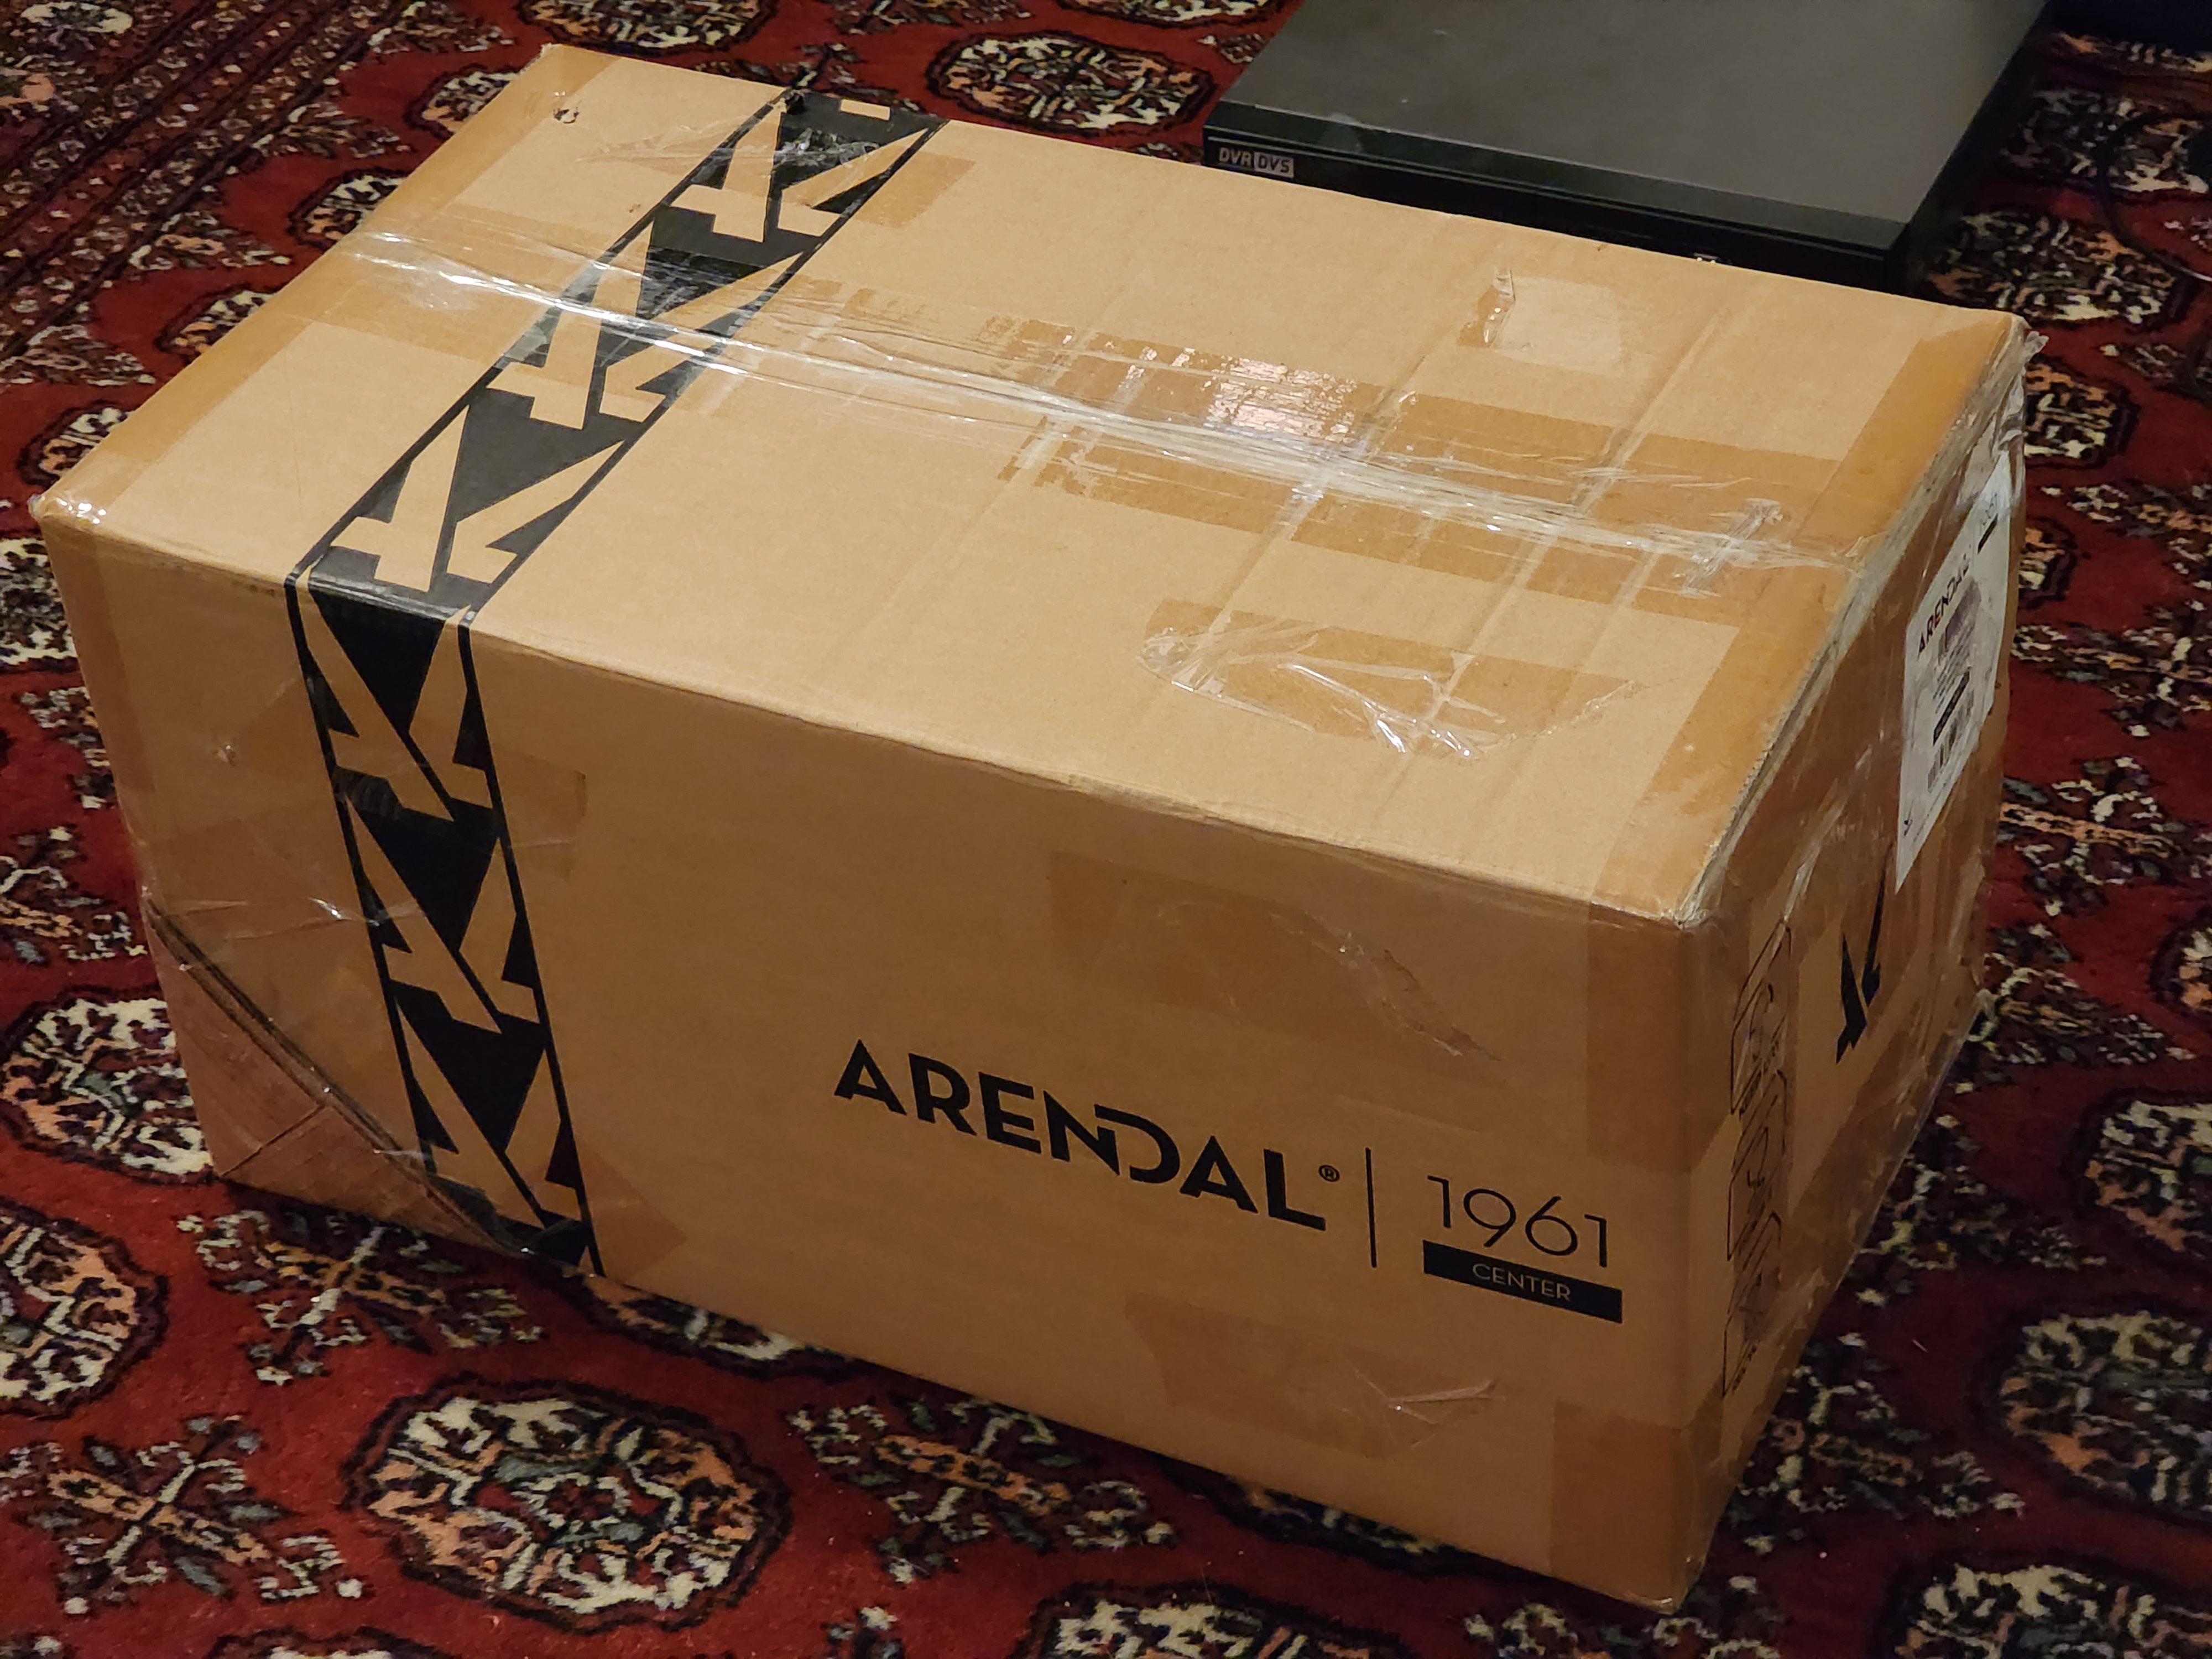 Arendal 1961 Center - Free shipping | AVS Forum